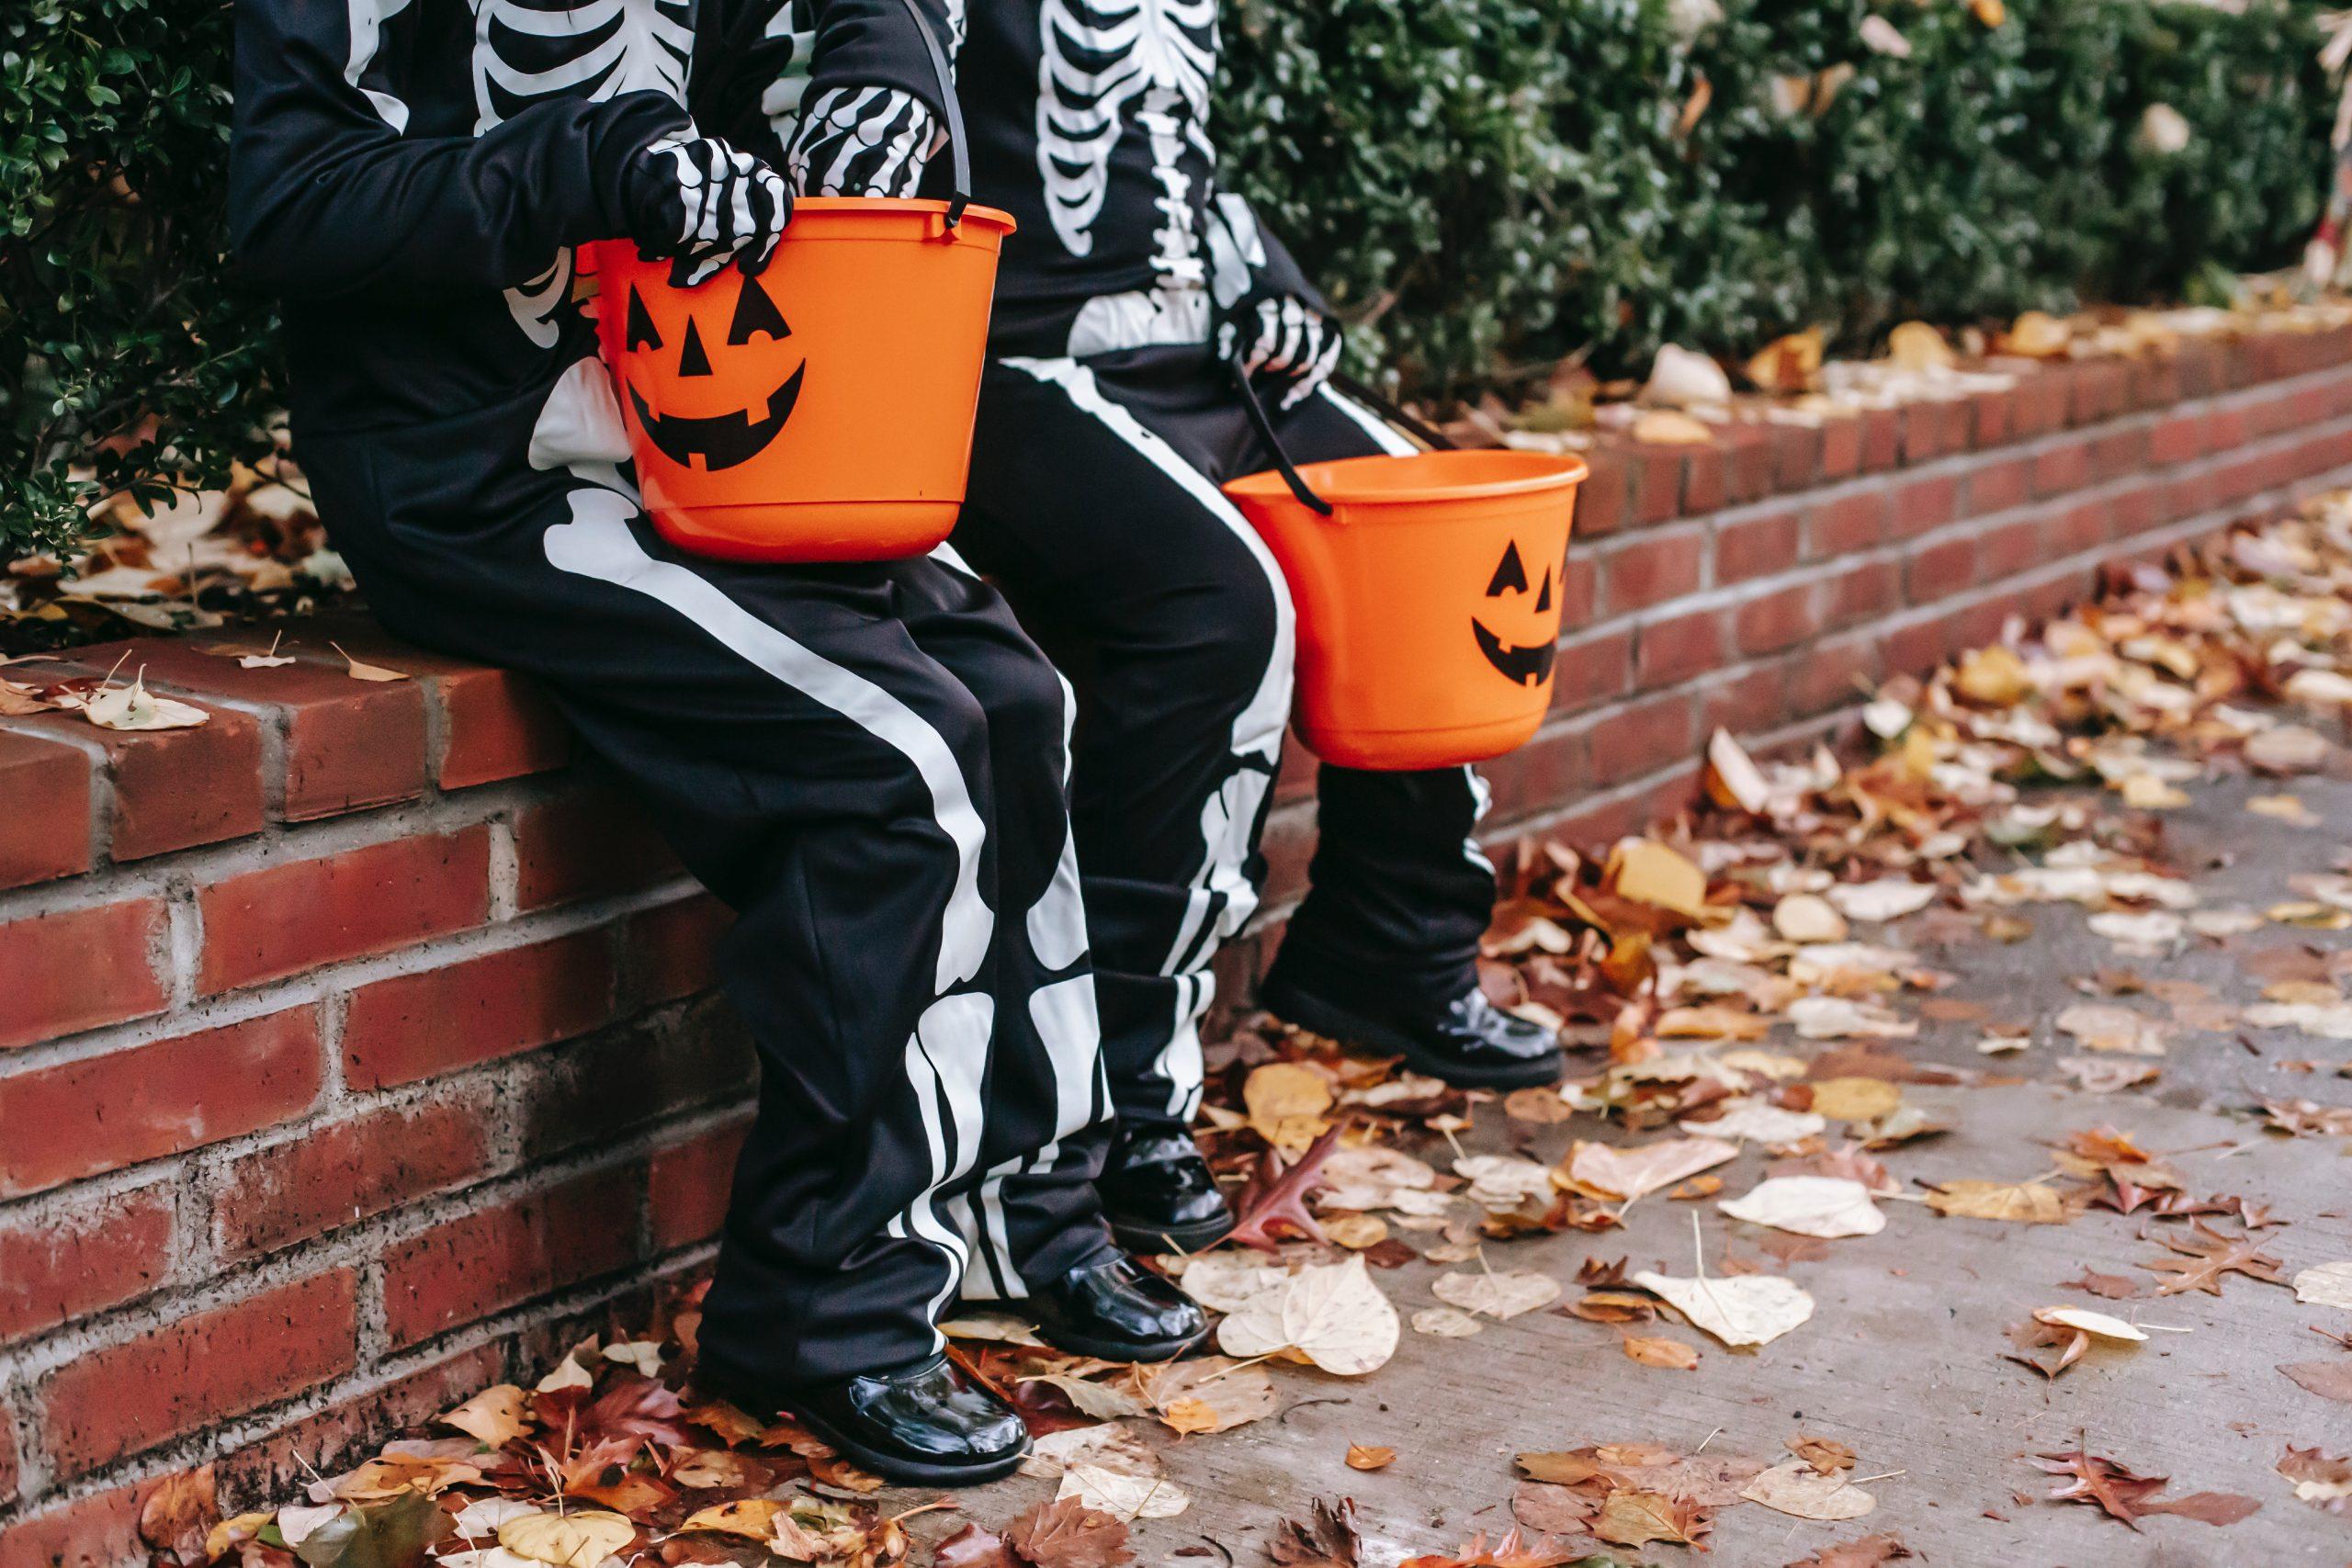 A Boo-tiful Time Awaits :: Lafayette's Family-Friendly Halloween Festivities